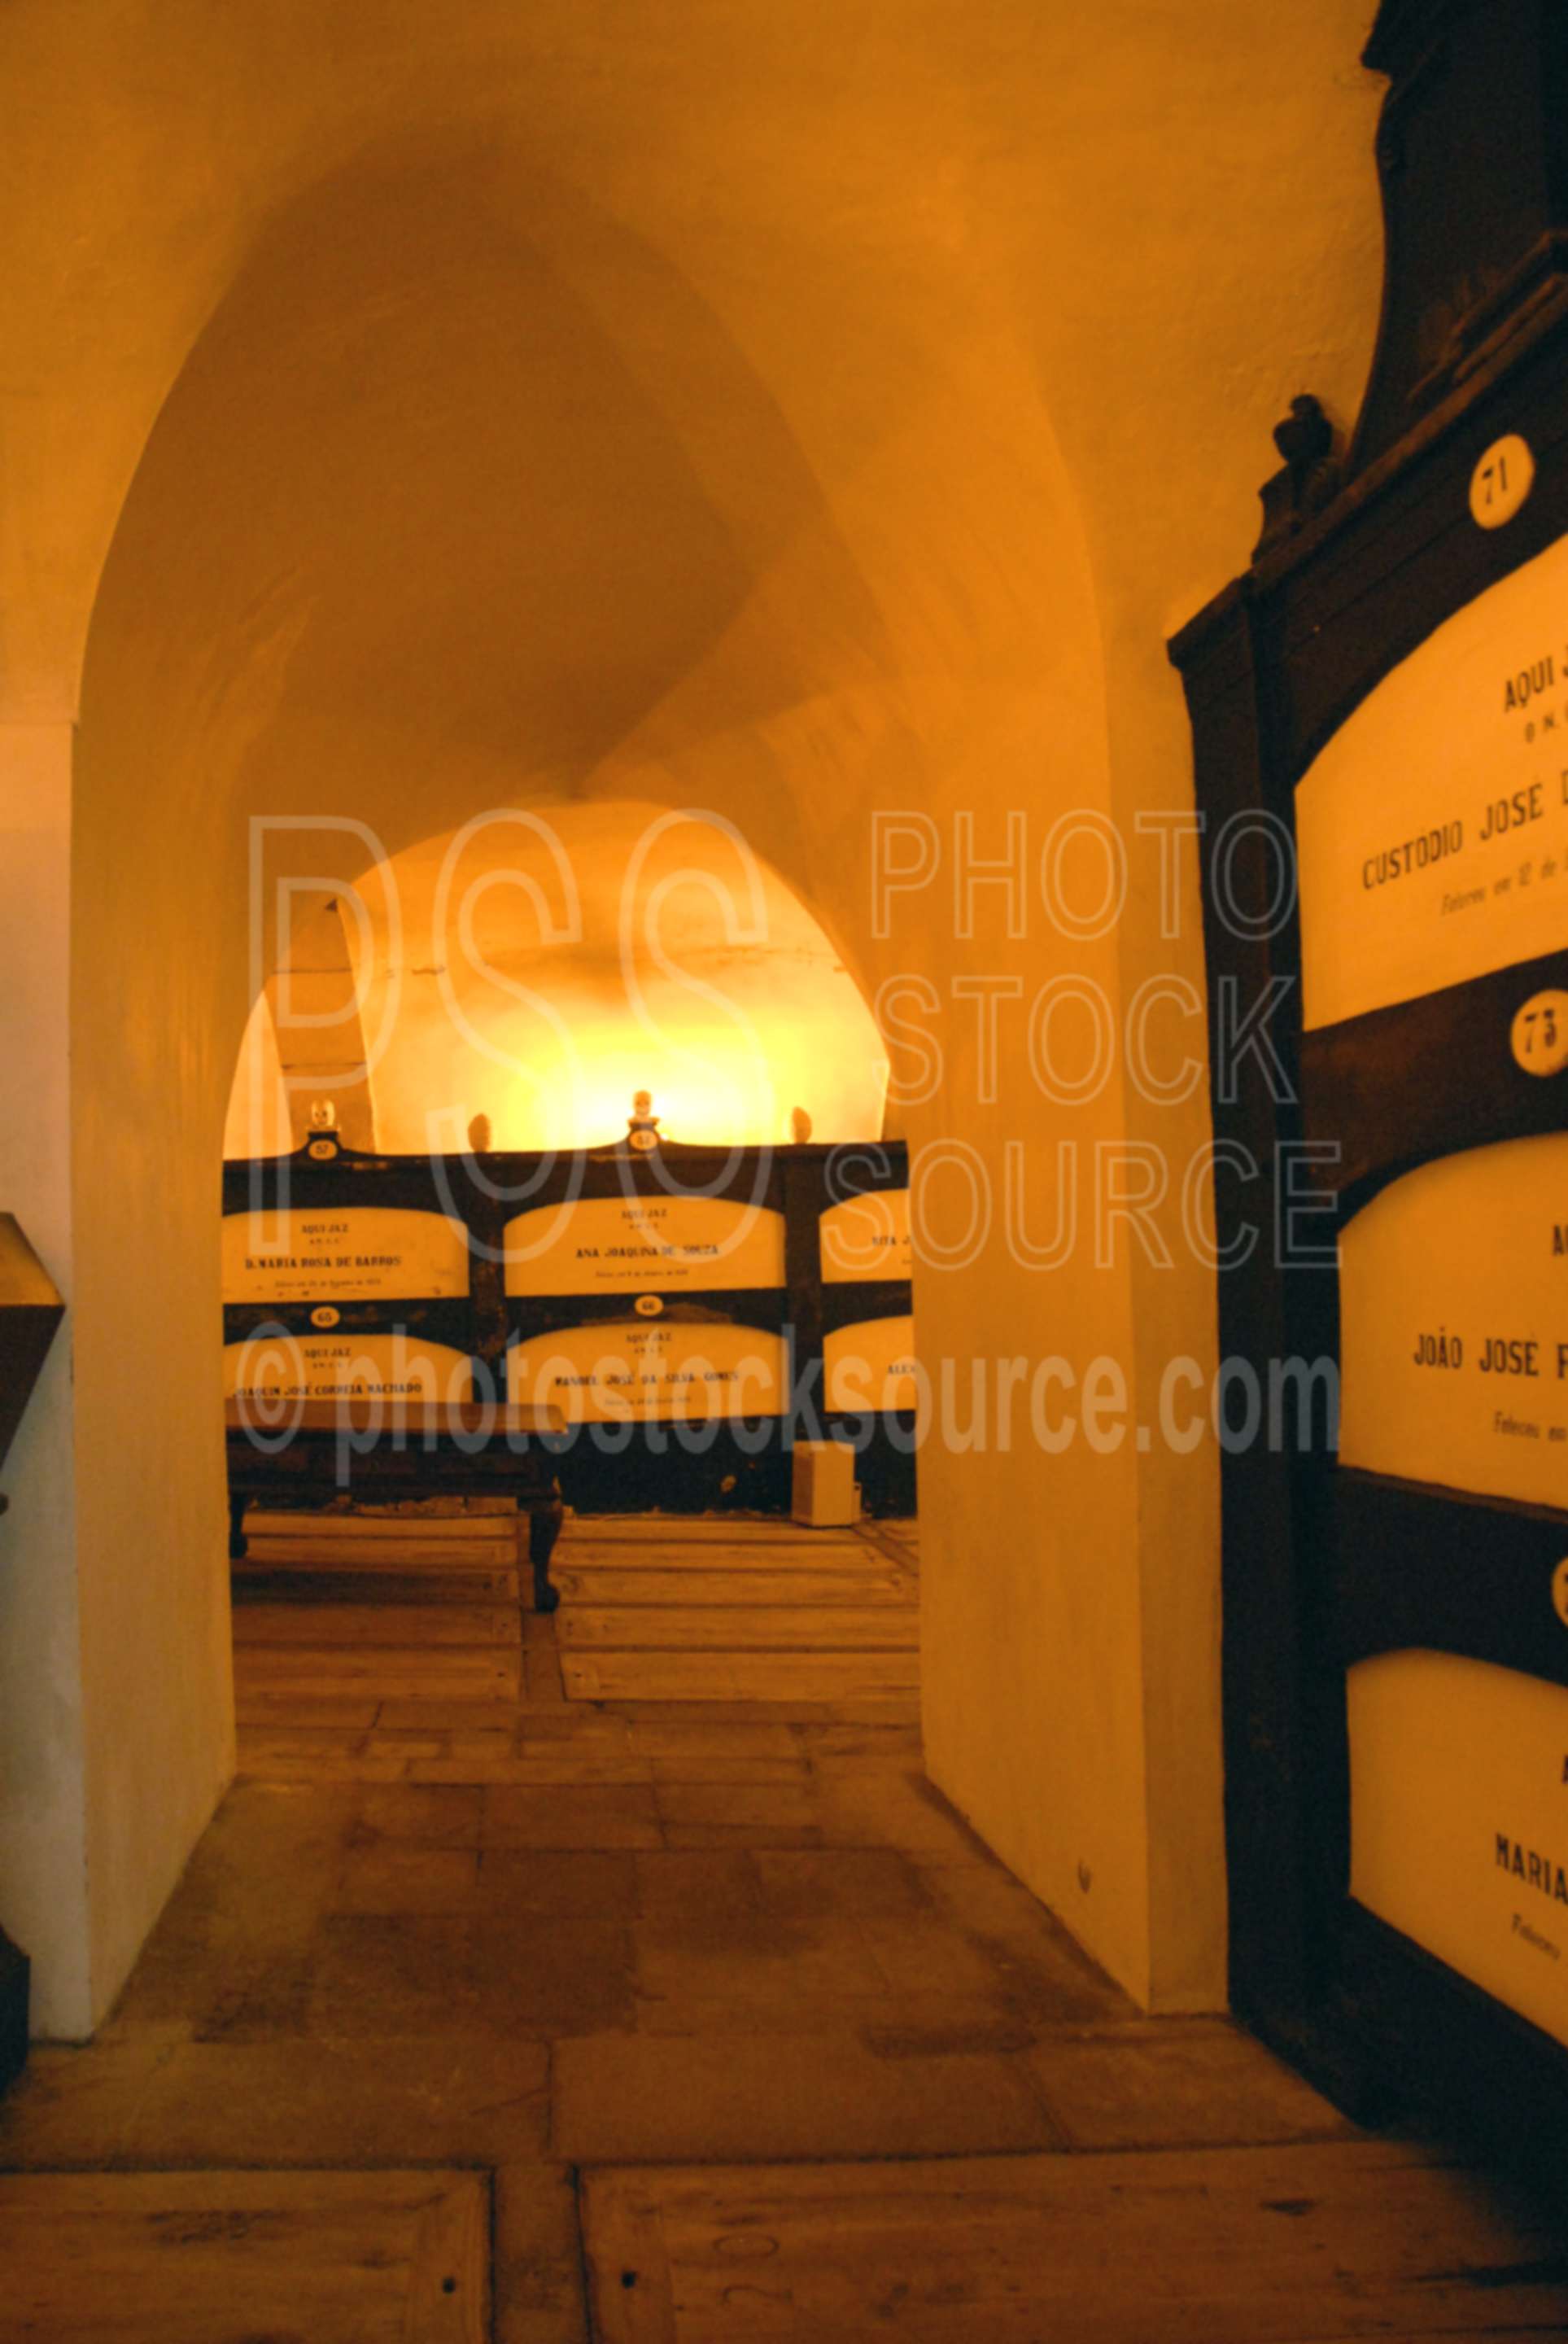 Catacomb Tombs,porto,igreja de sao francisco,catacomb,catacombs,tomb,tombs,grave,graves,portugal churches